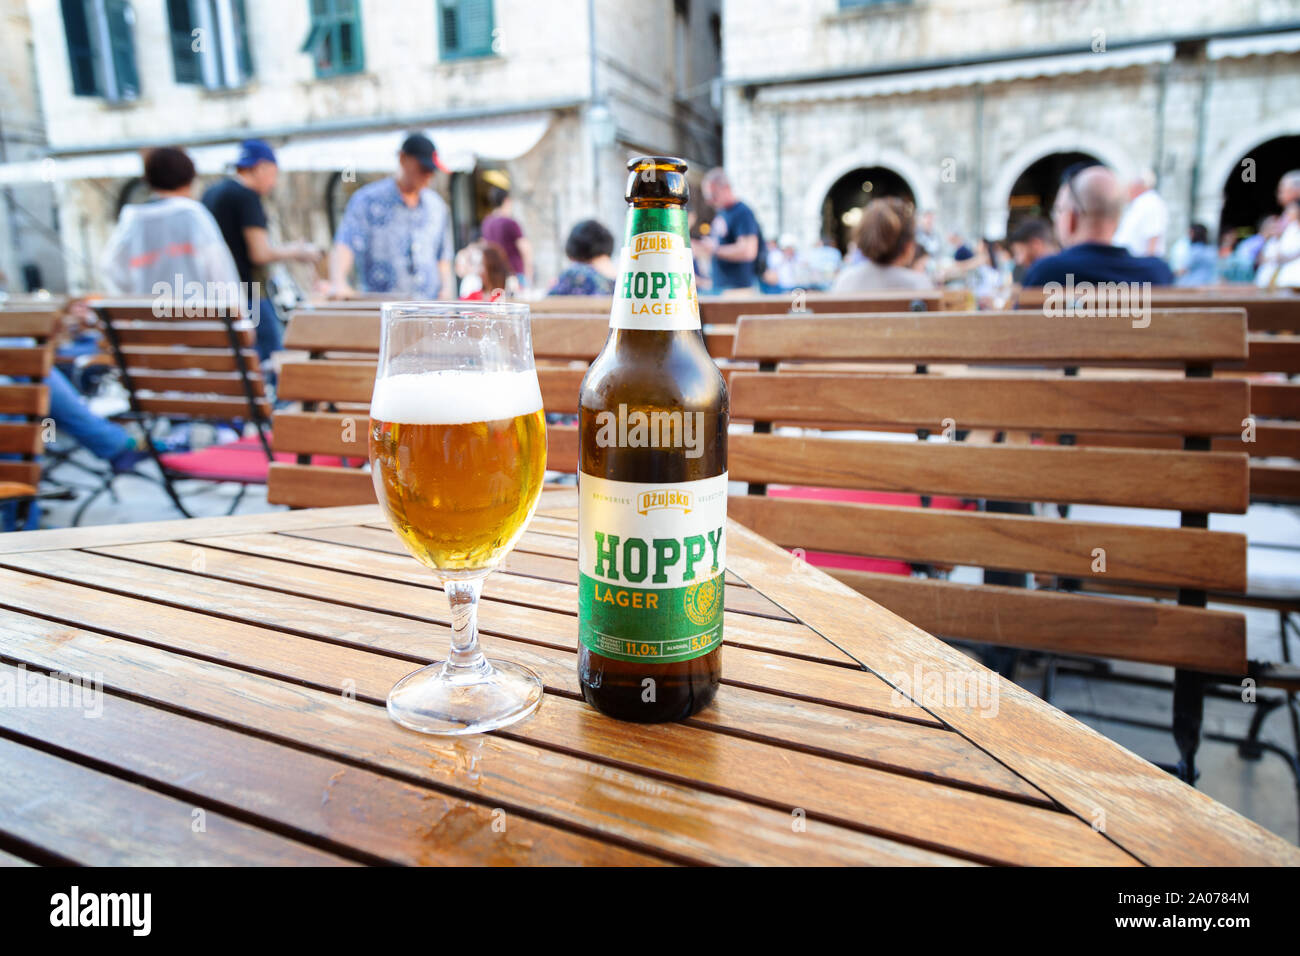 Croatia beer; a bottle and glass of croatian beer on a table, Dubrovnik, Croatia Europe Stock Photo